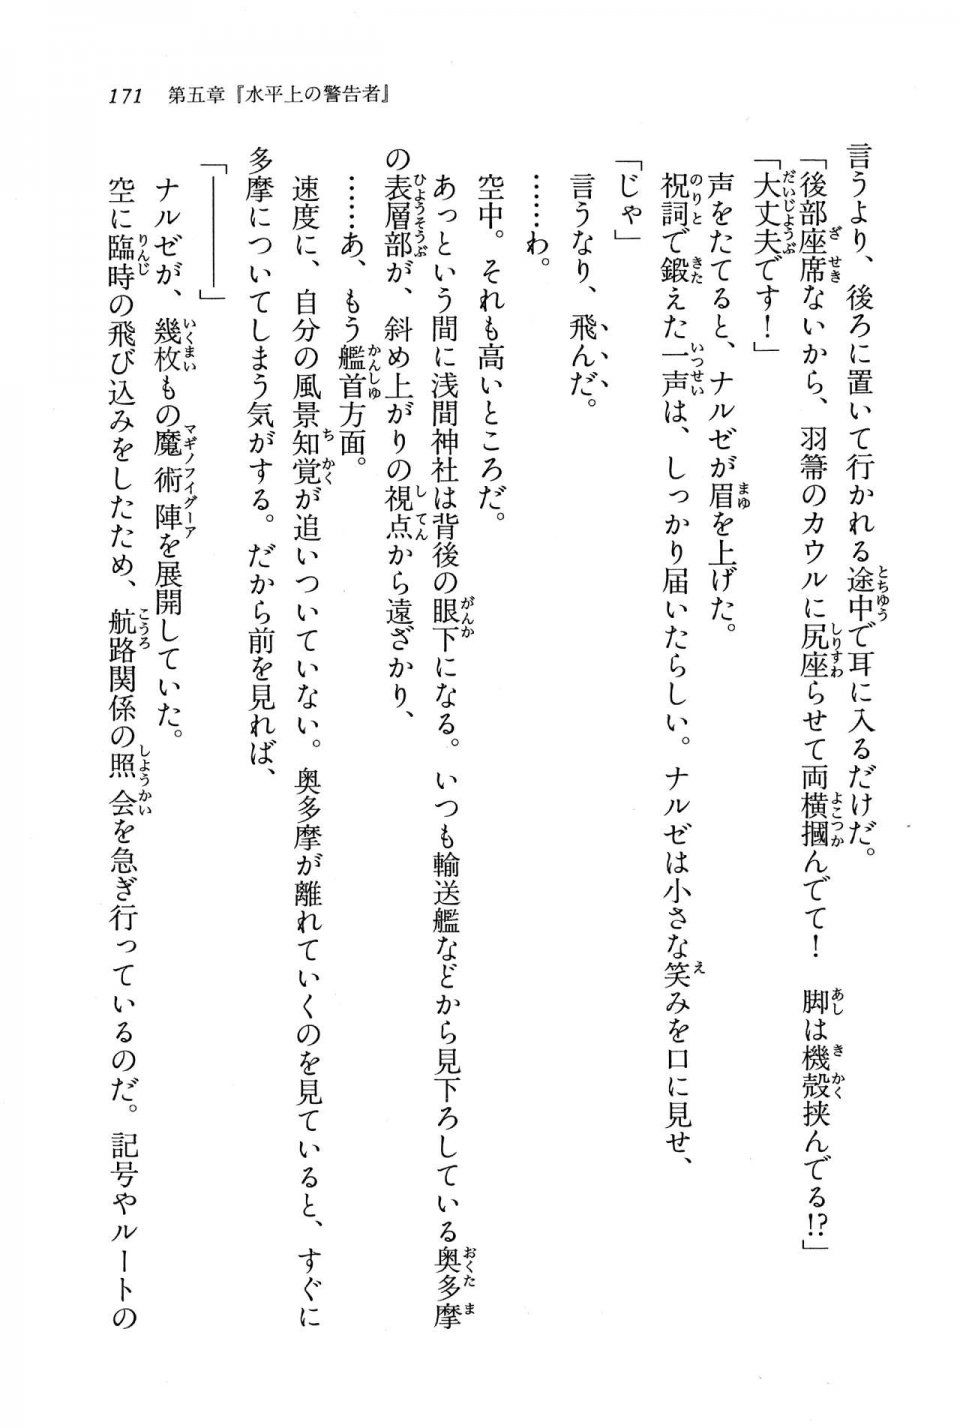 Kyoukai Senjou no Horizon BD Special Mininovel Vol 7(4A) - Photo #175